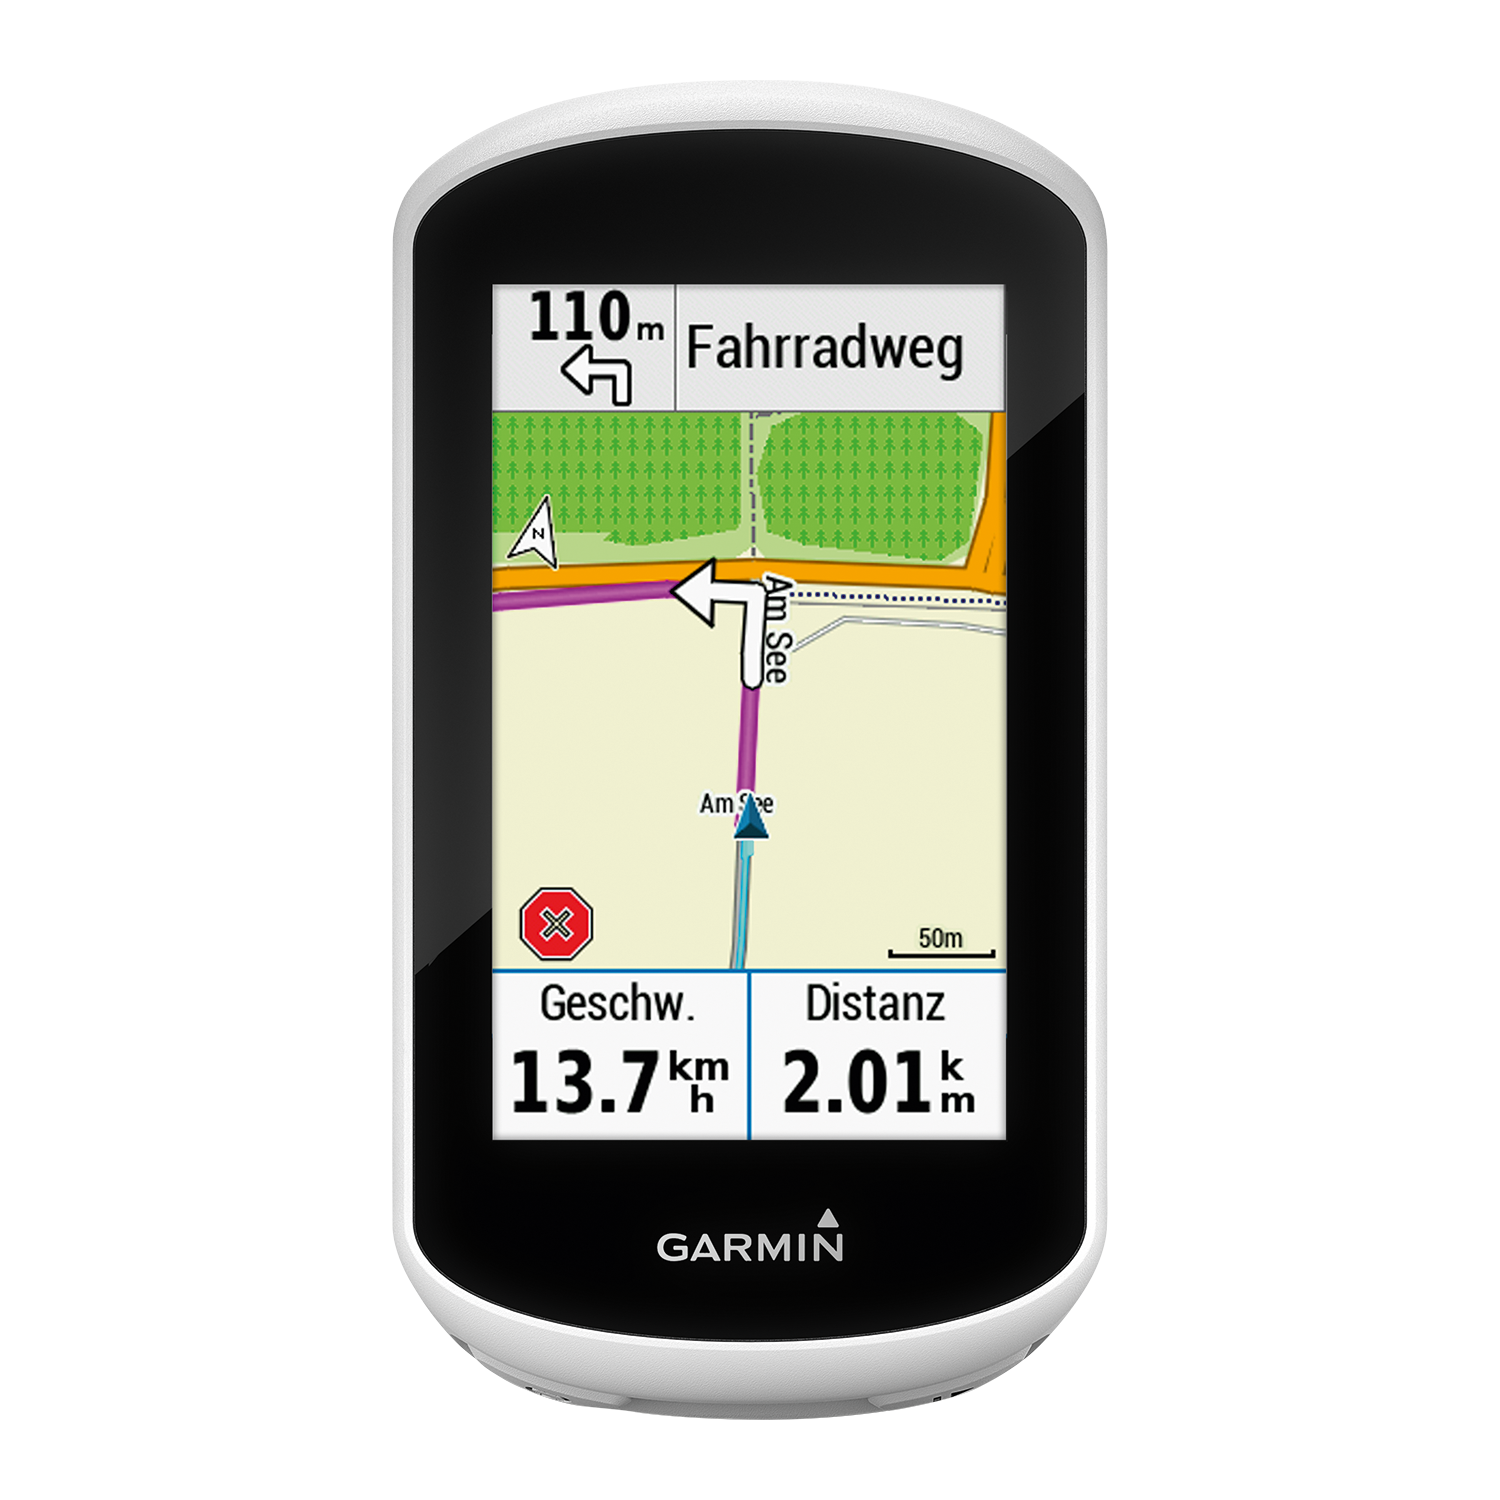 Navigatore GPS